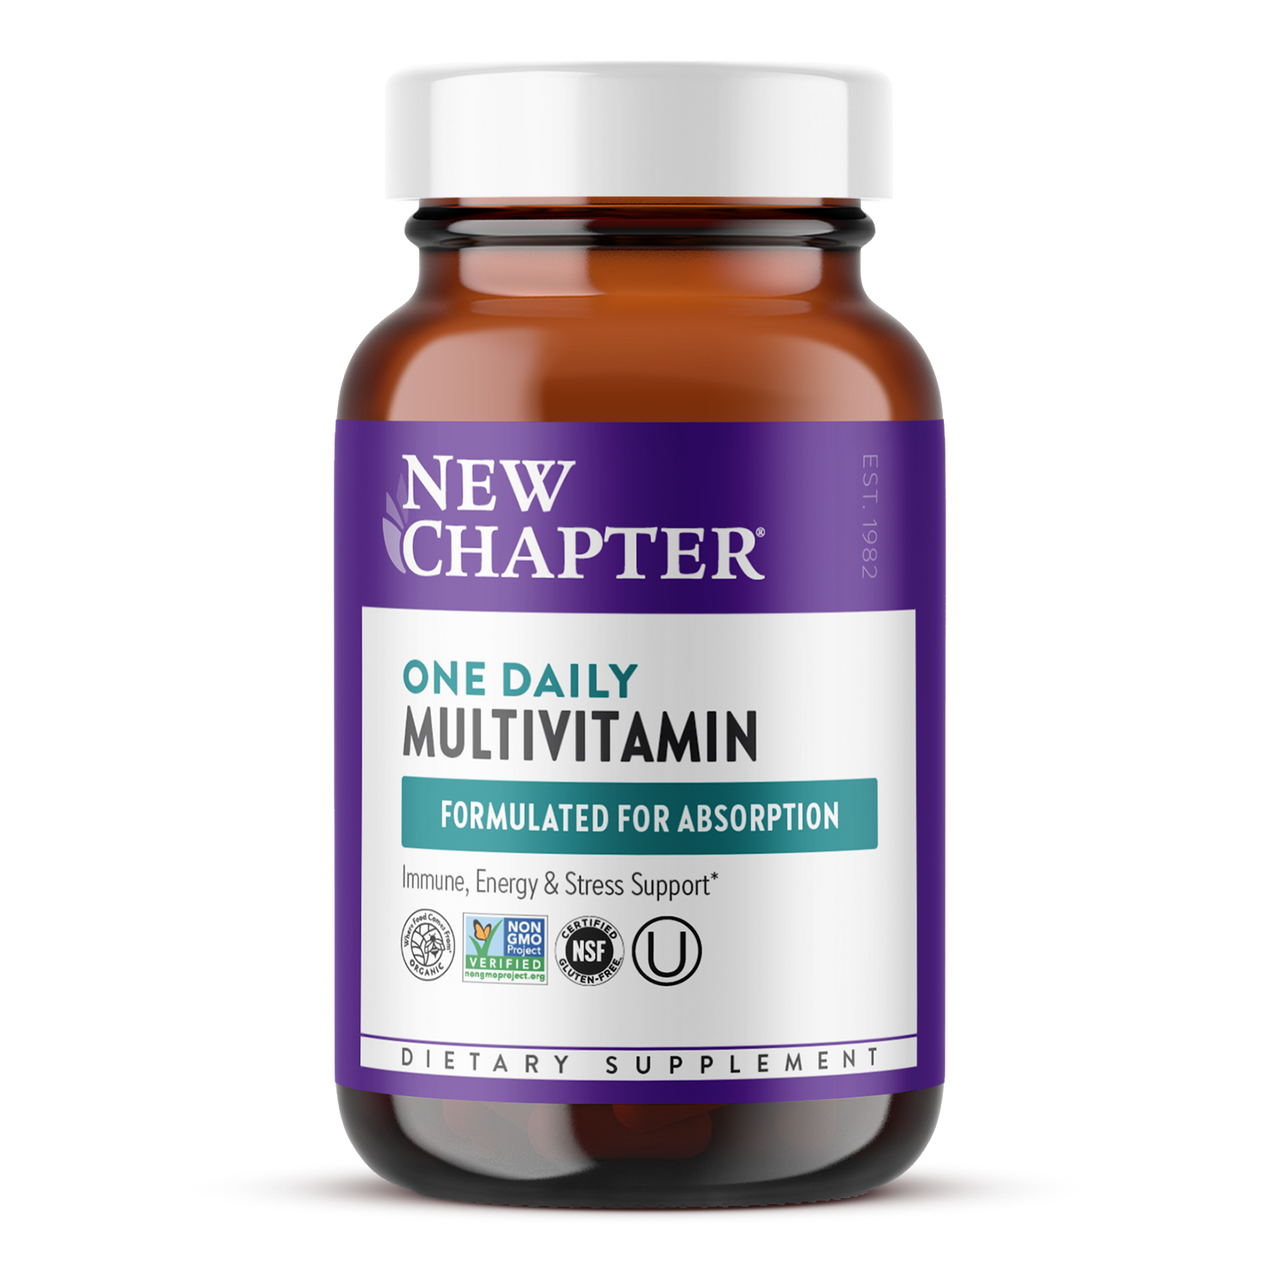 One Daily Multivitamin